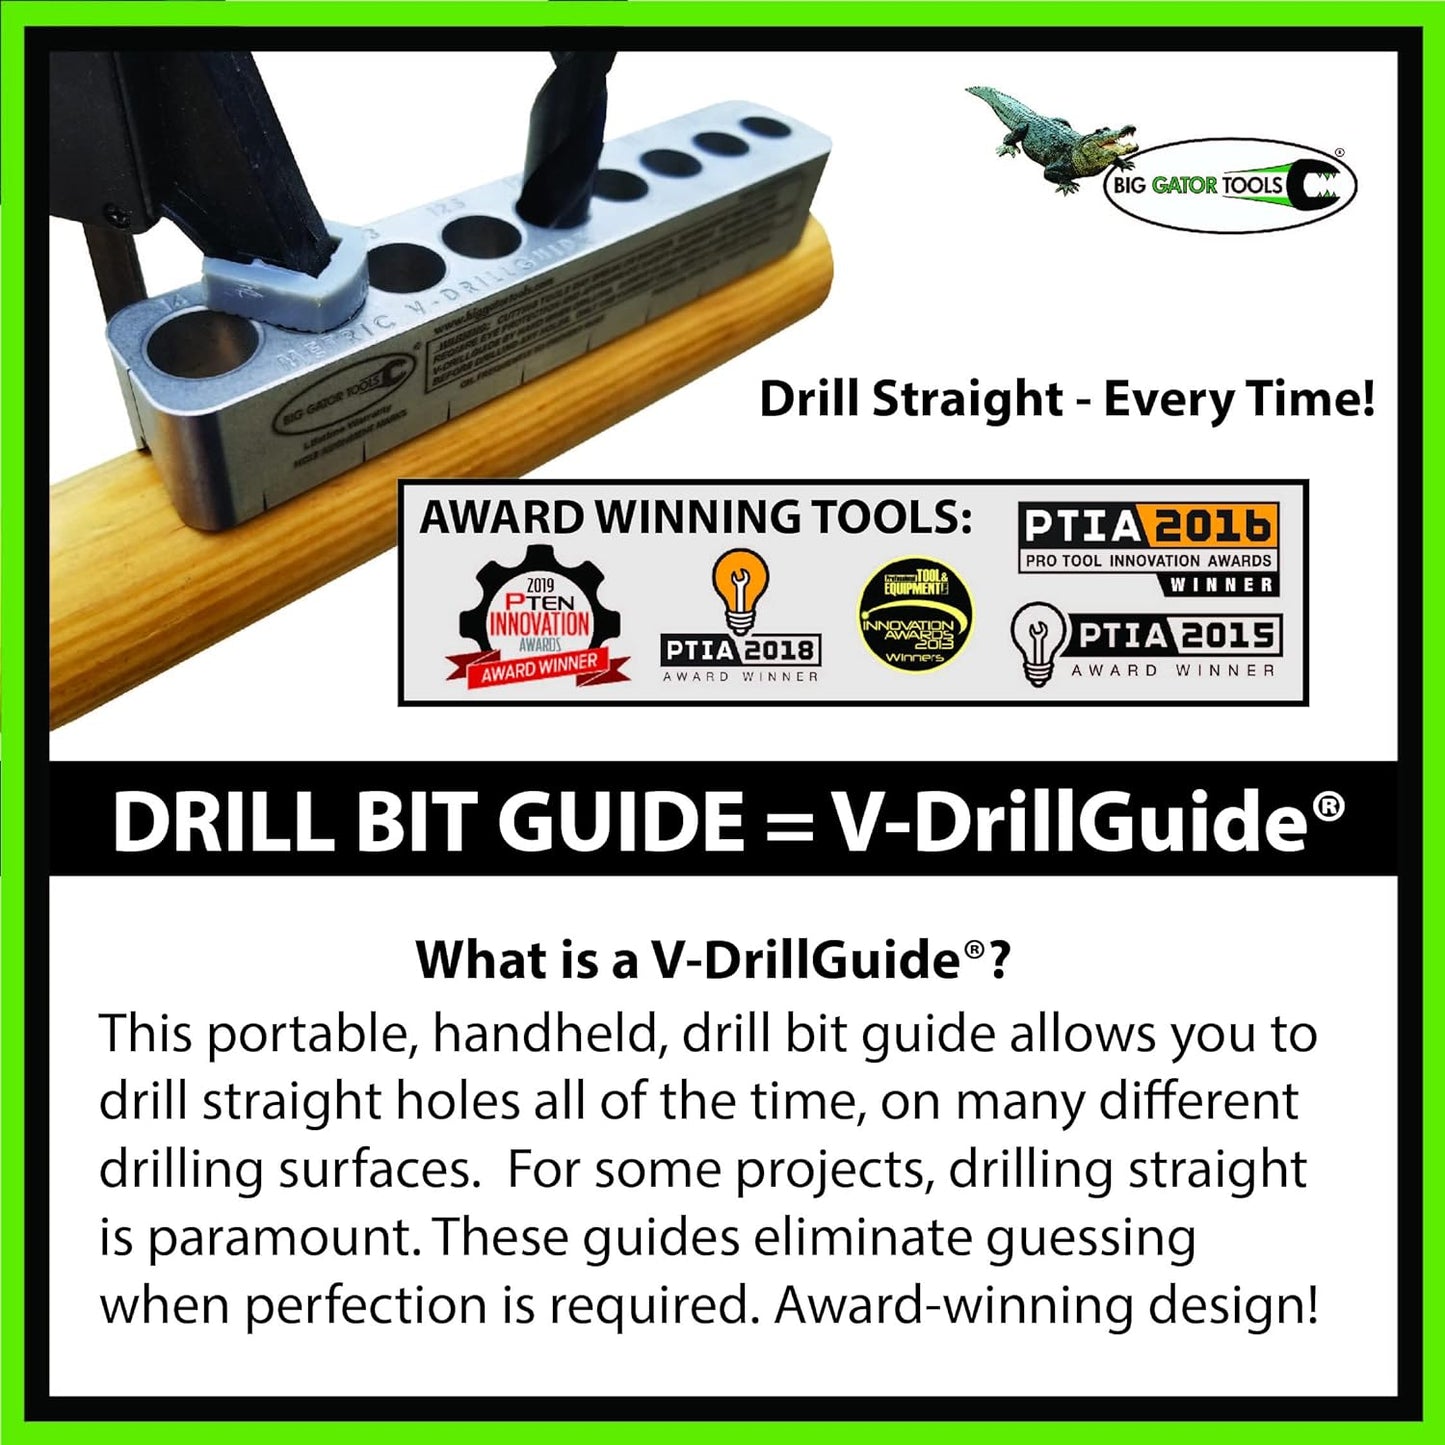 Standard V-DrillGuide (33/64"-5/8") - Big Gator Tools Drill Bit Guide - STD3000DGNP